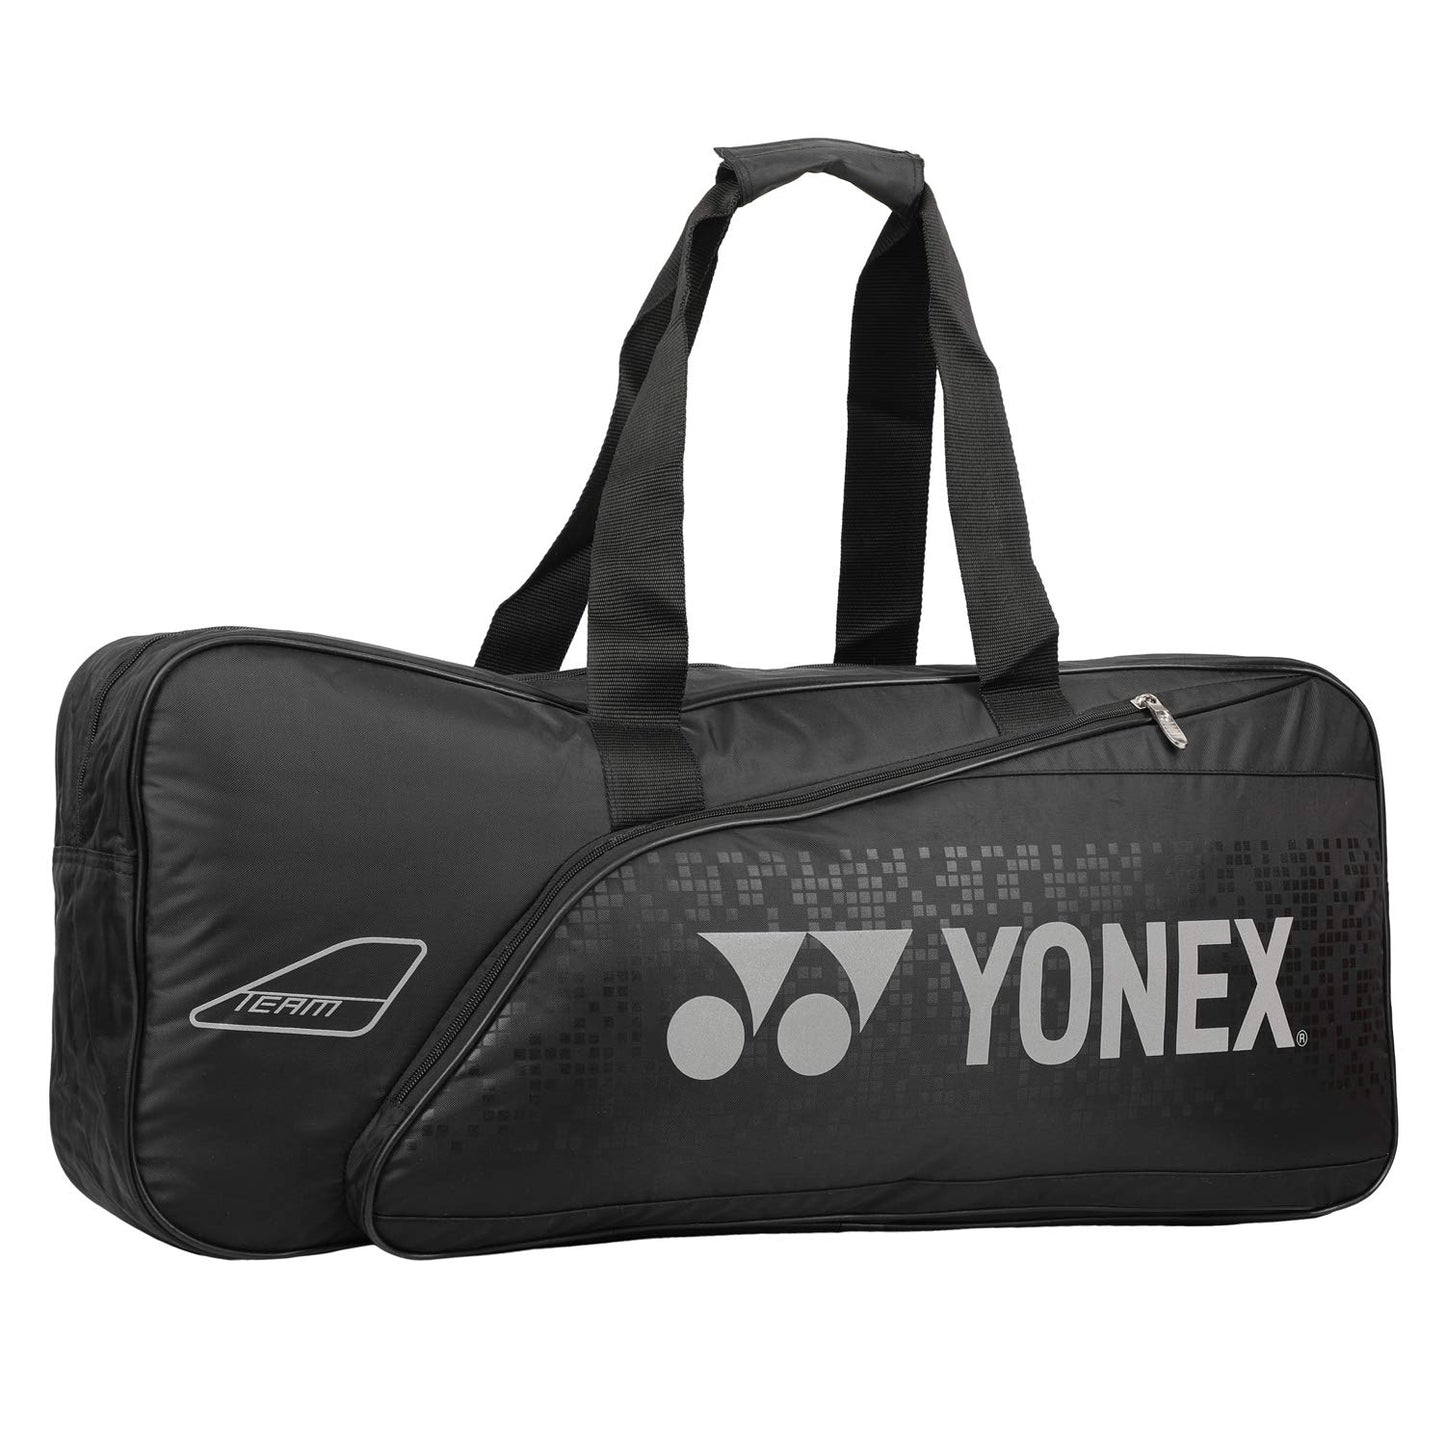 Yonex SUNR4911TH Team Tournament Badminton Kitbag, Black - Best Price online Prokicksports.com